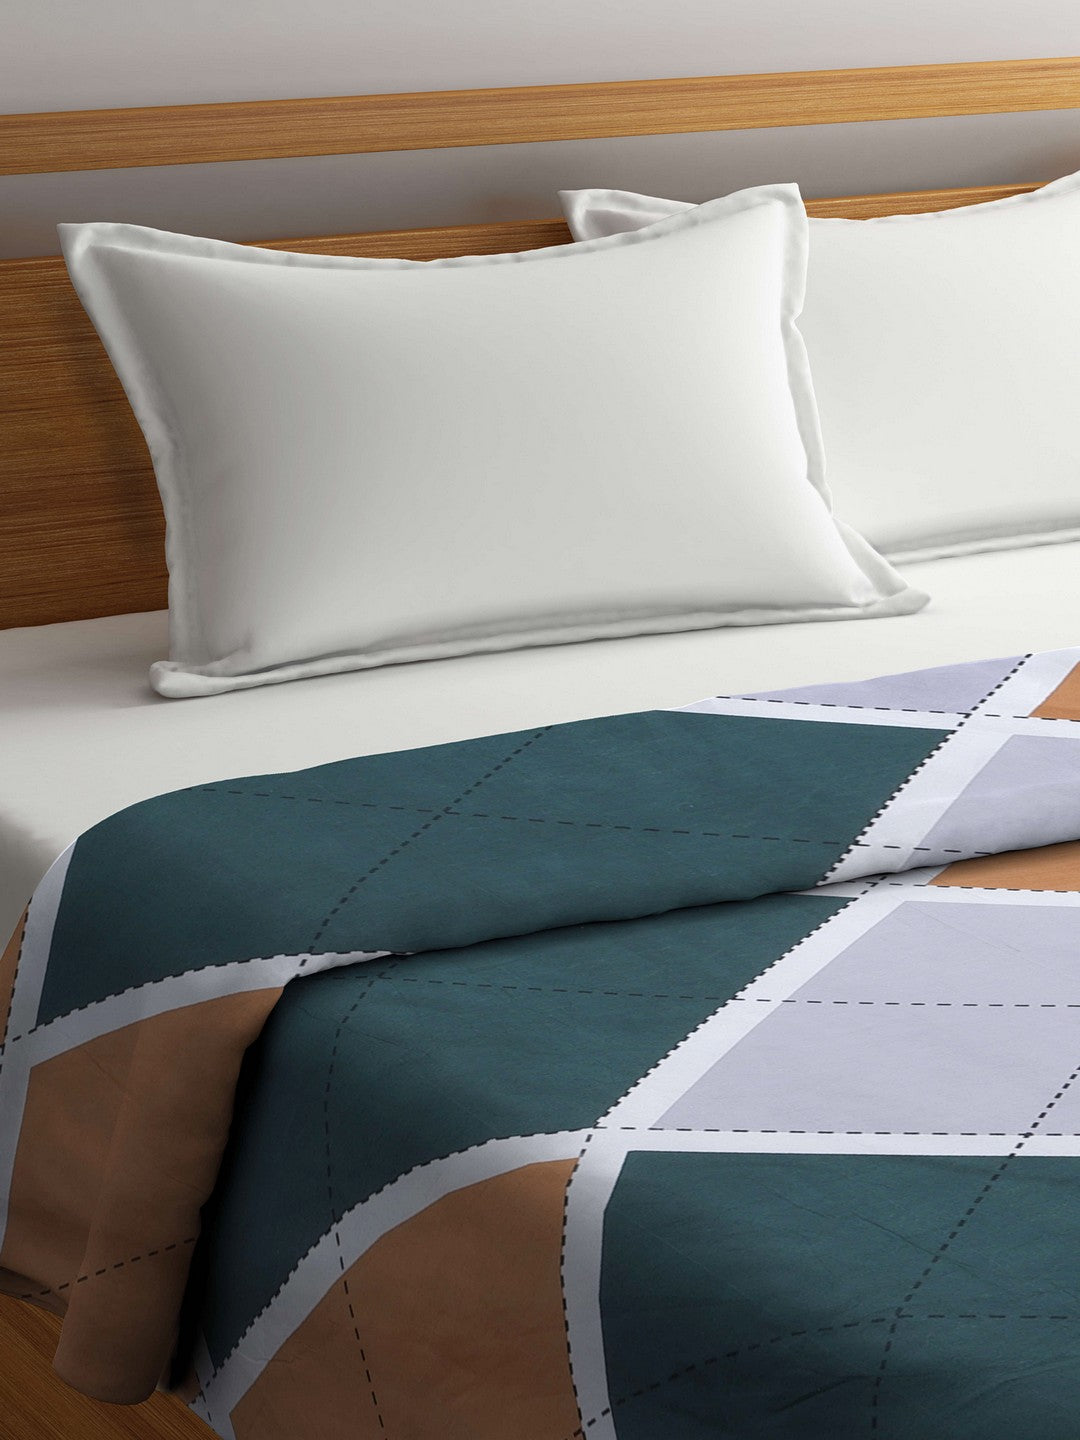 Arrabi Multi Geometric TC Cotton Blend 350 GSM Double Size Comforter (240 x 215 cm)